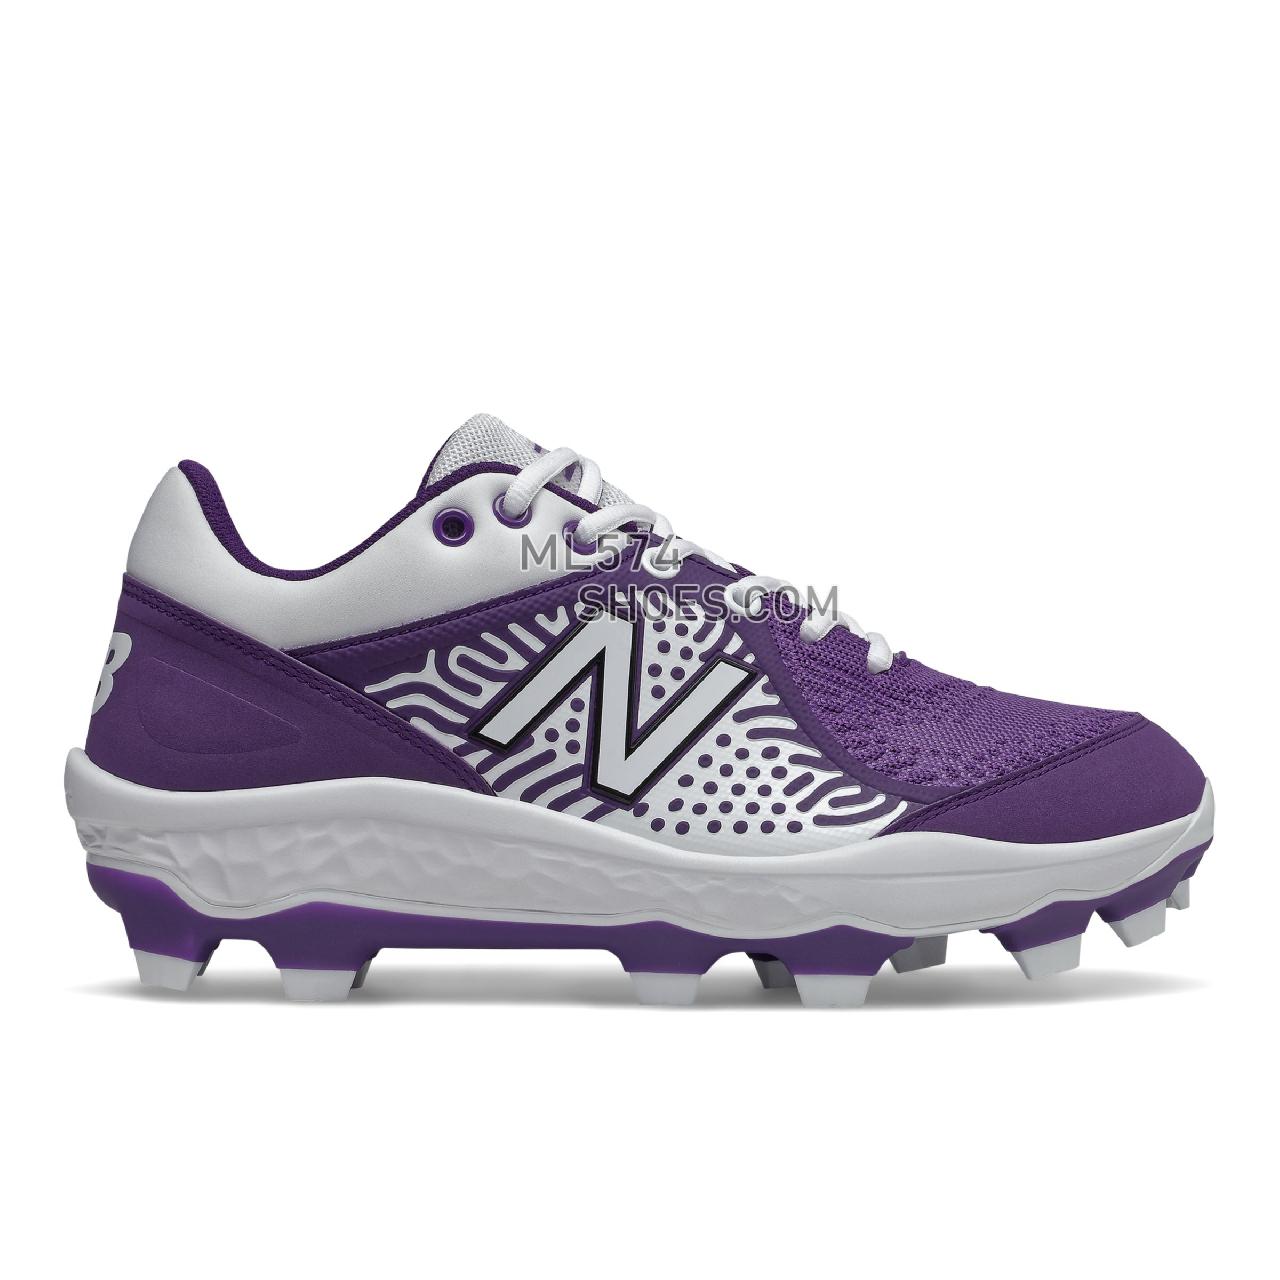 New Balance Fresh Foam 3000 v5 Molded - Men's Mid-Cut Baseball Cleats - Purple with White - PL3000P5